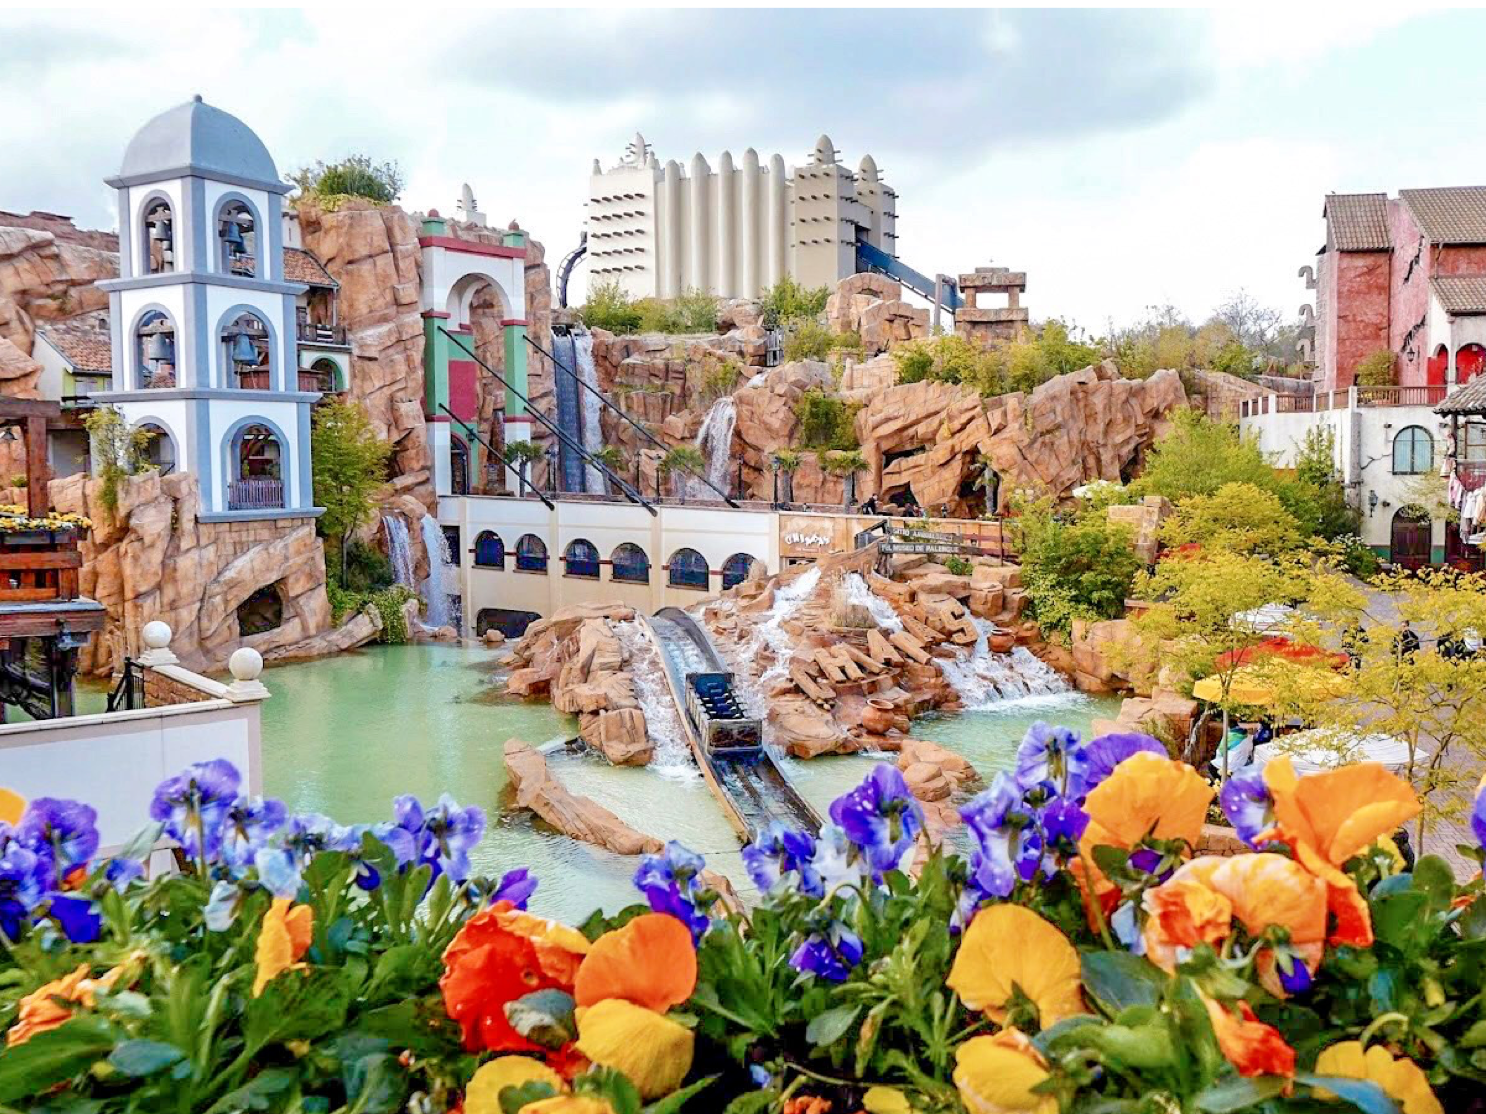 Theme parks around the world to explore from Dubai - Phantasialand, Germany